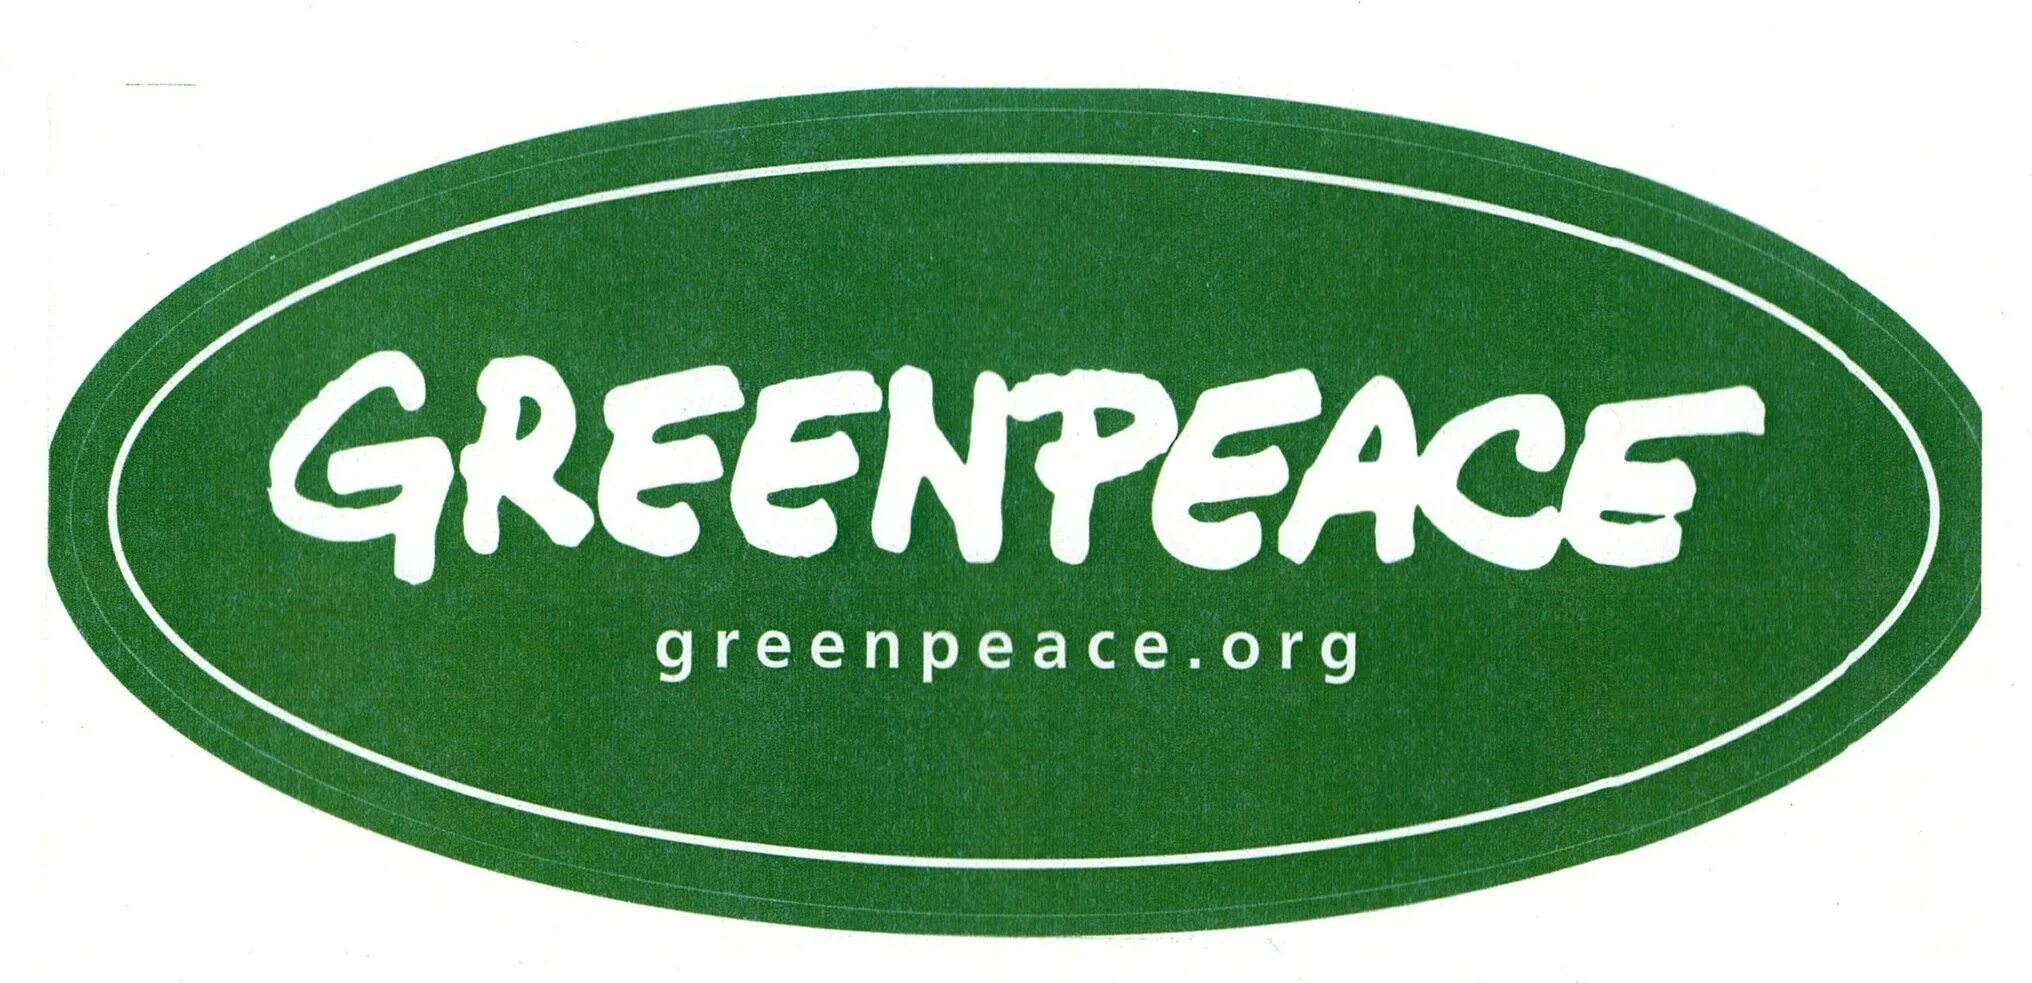 3 greenpeace